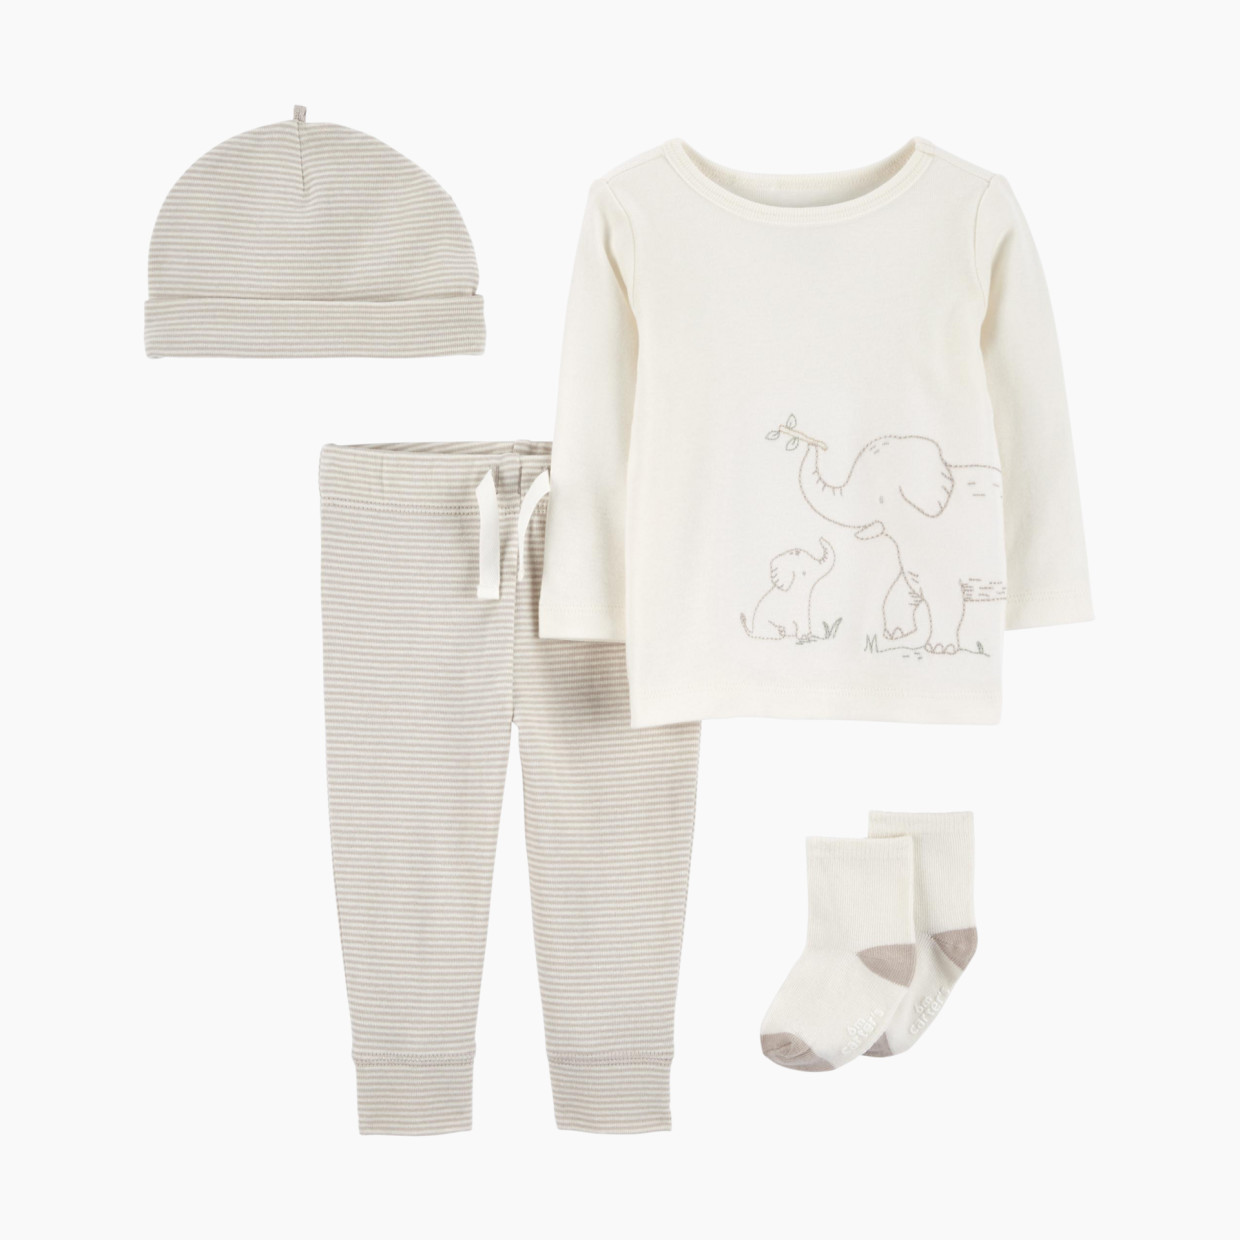 Carter's 4-Piece Elephant Outfit Set - Grey/Ivory, 12 M.